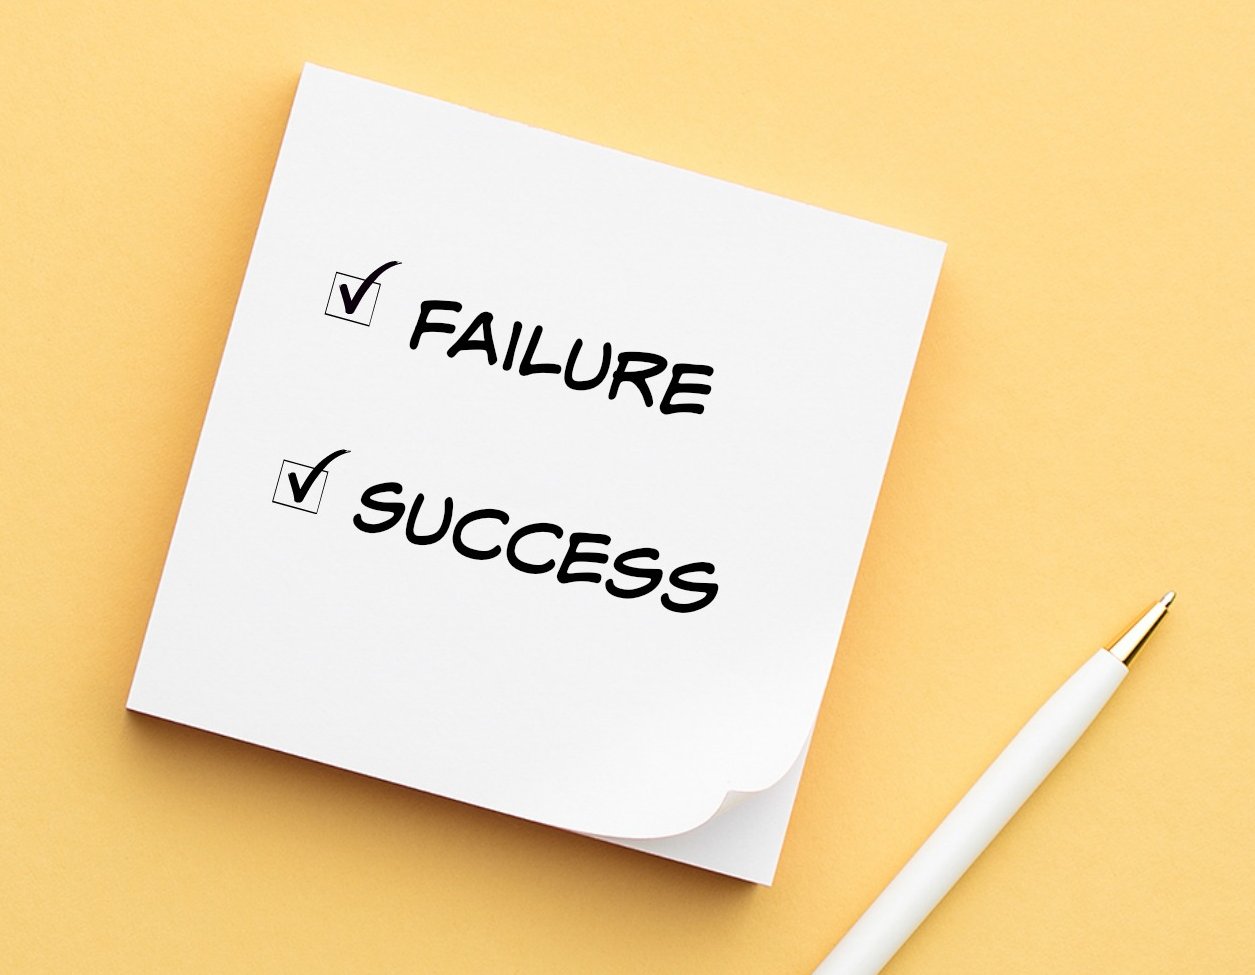 Creative Small Business Success: 5 Ways Failure Made Me Succeed